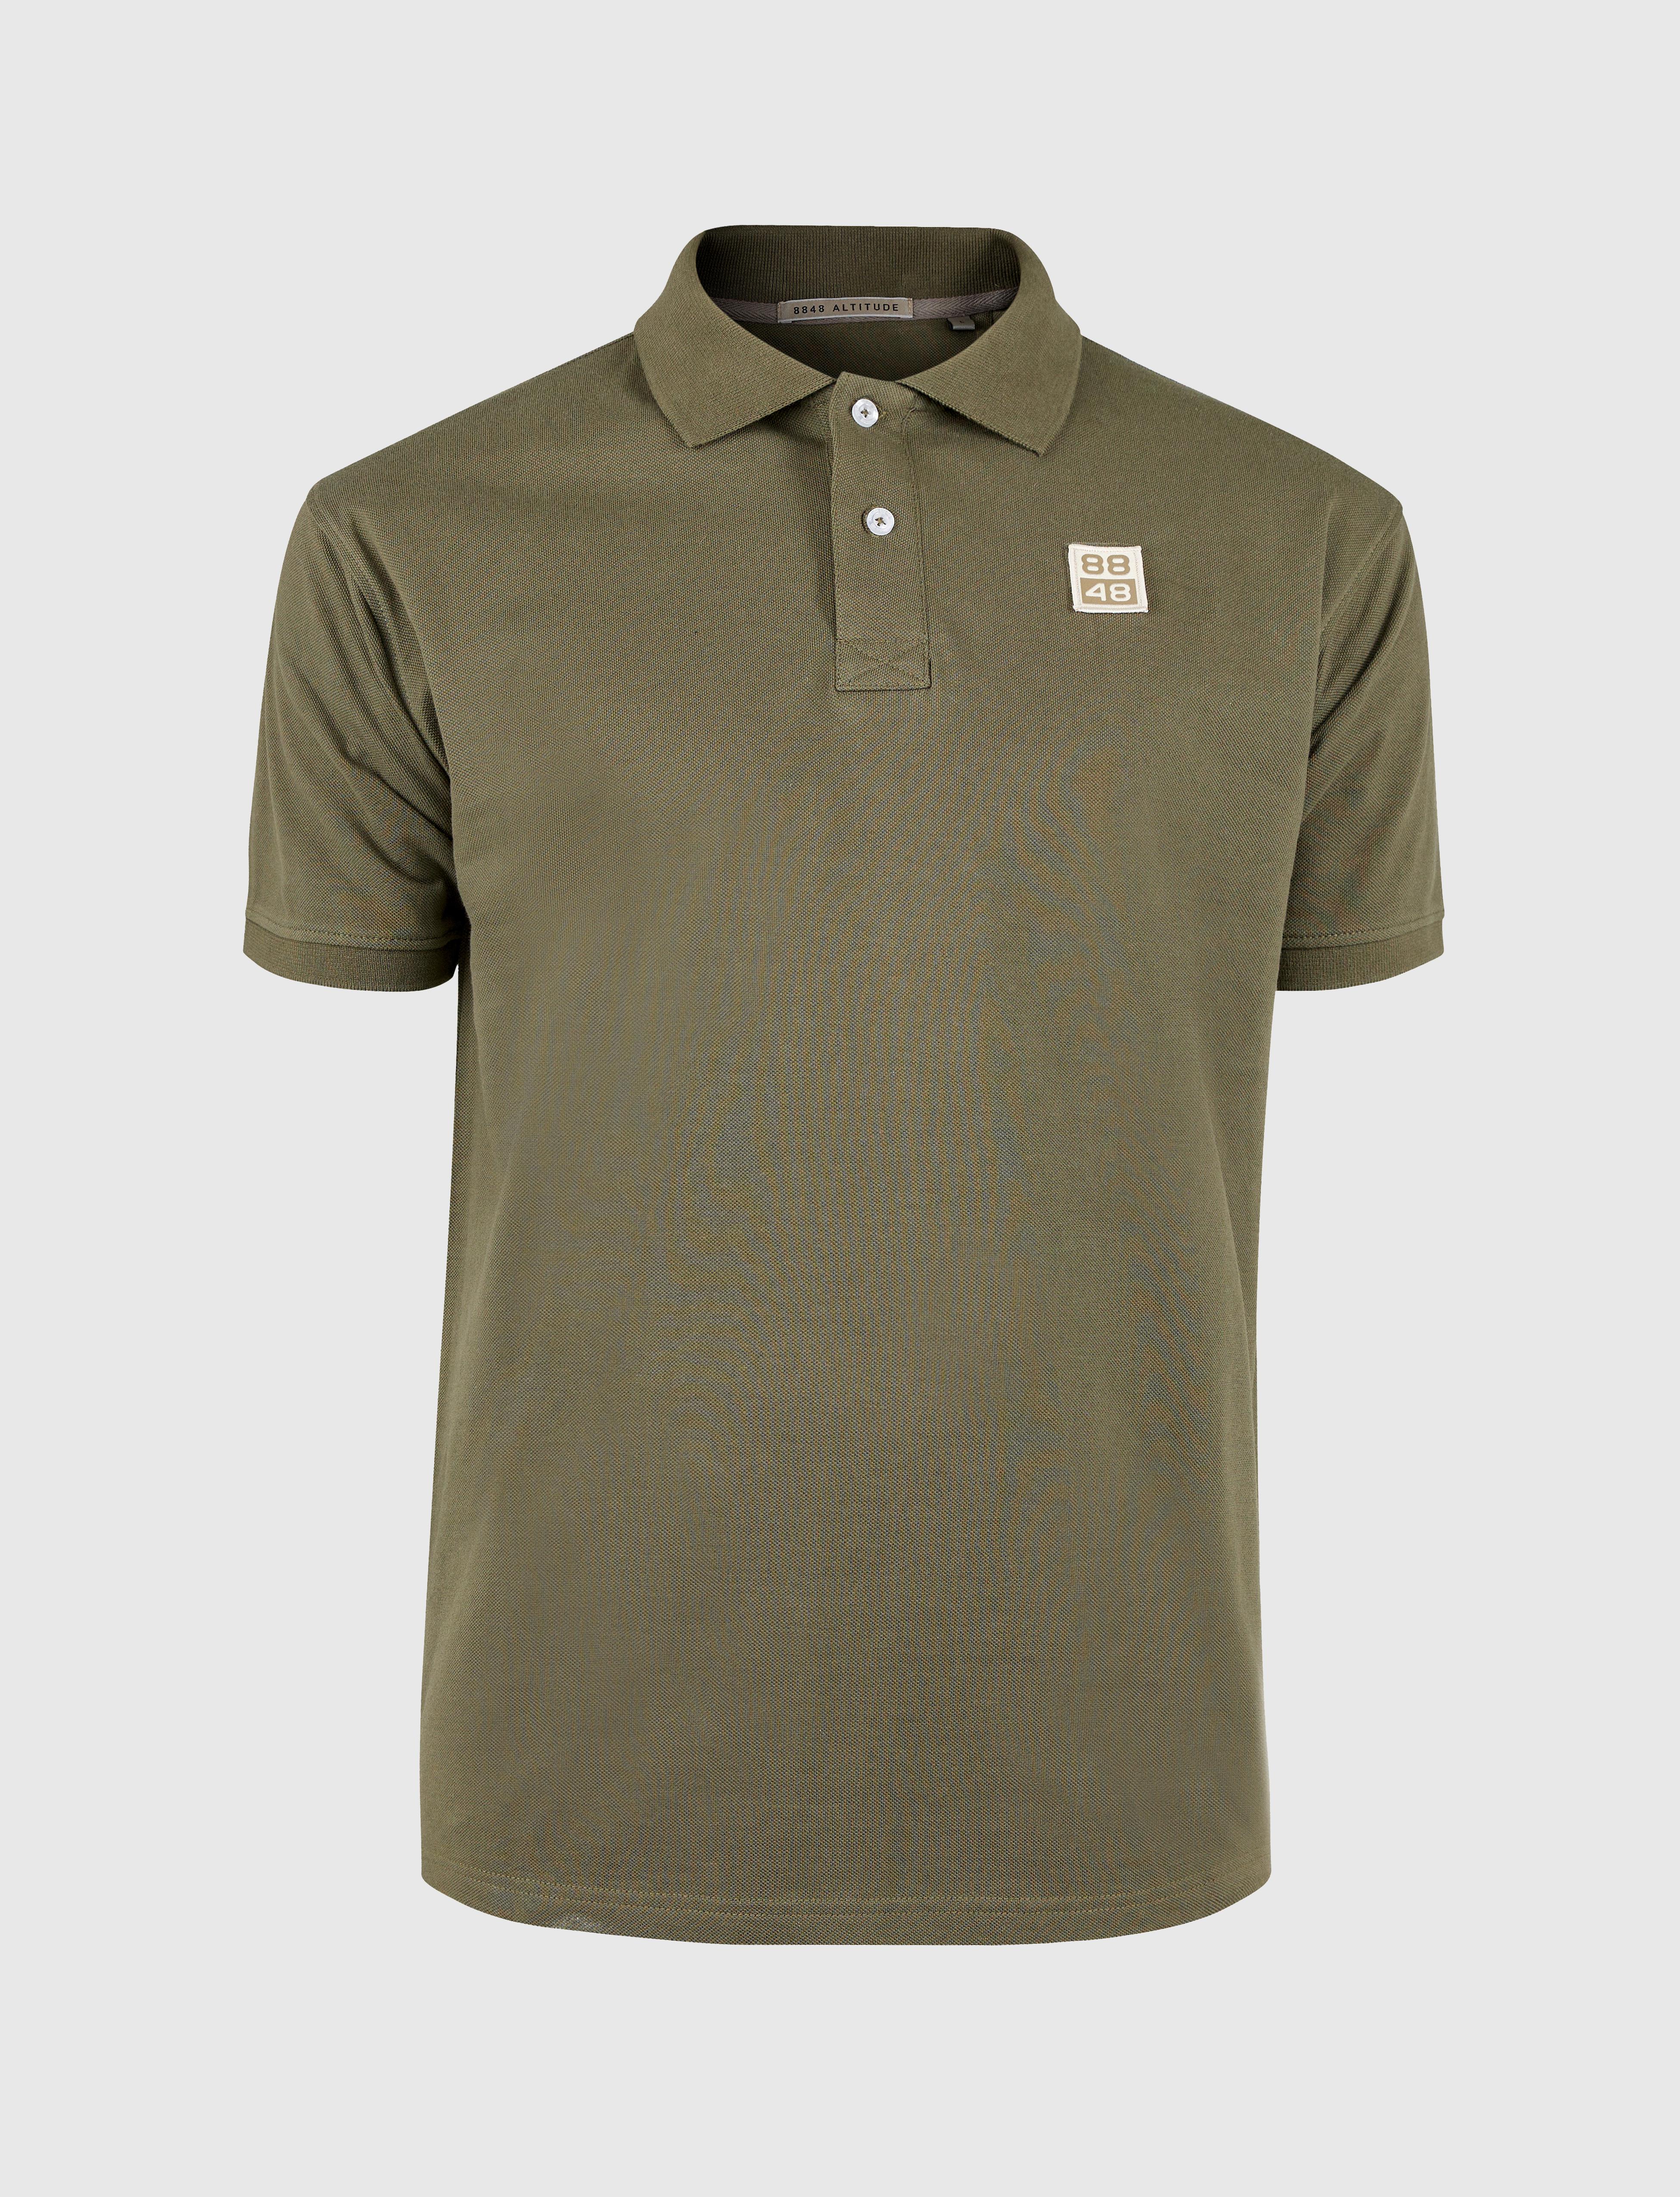 88 Logo Polo Shirt Army Green - Grüne Polo Hemd Herren